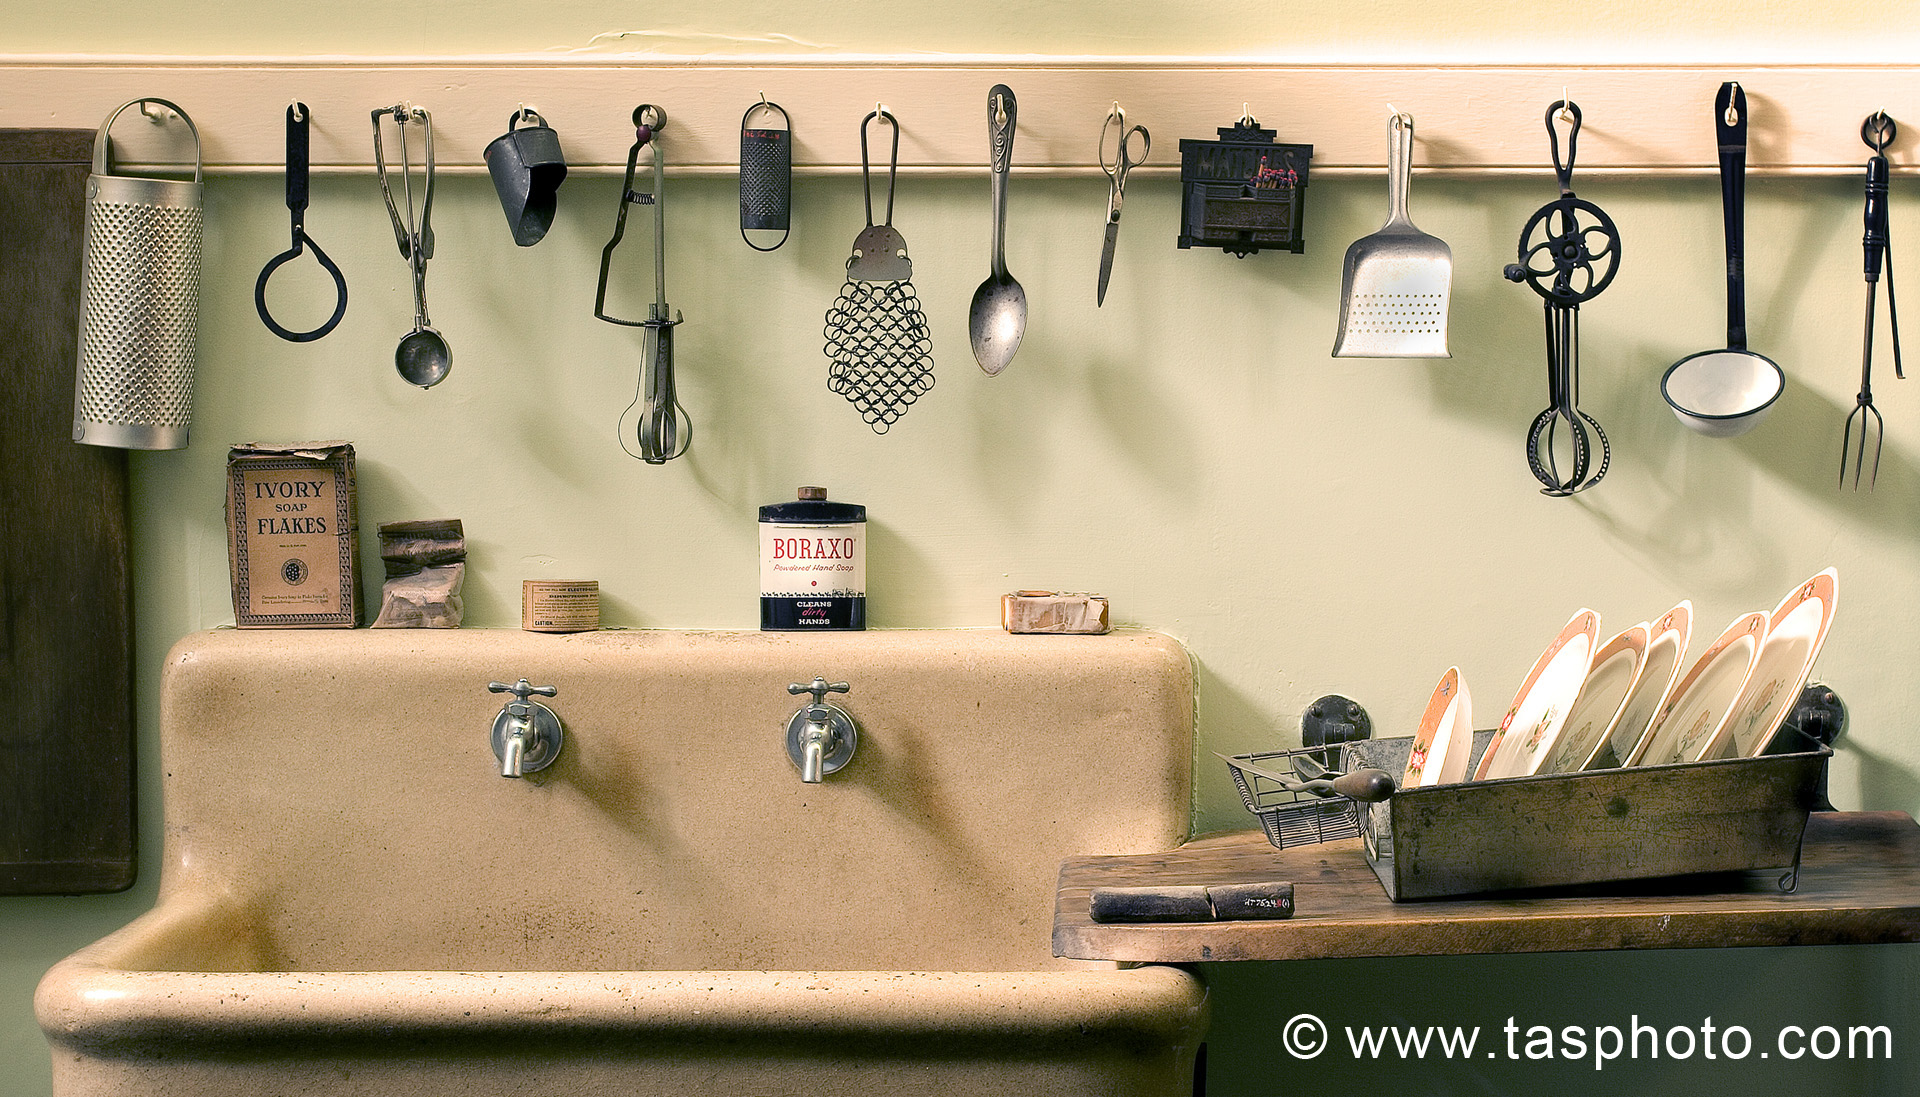 Kitchen sink with vintage utensils hanging above.